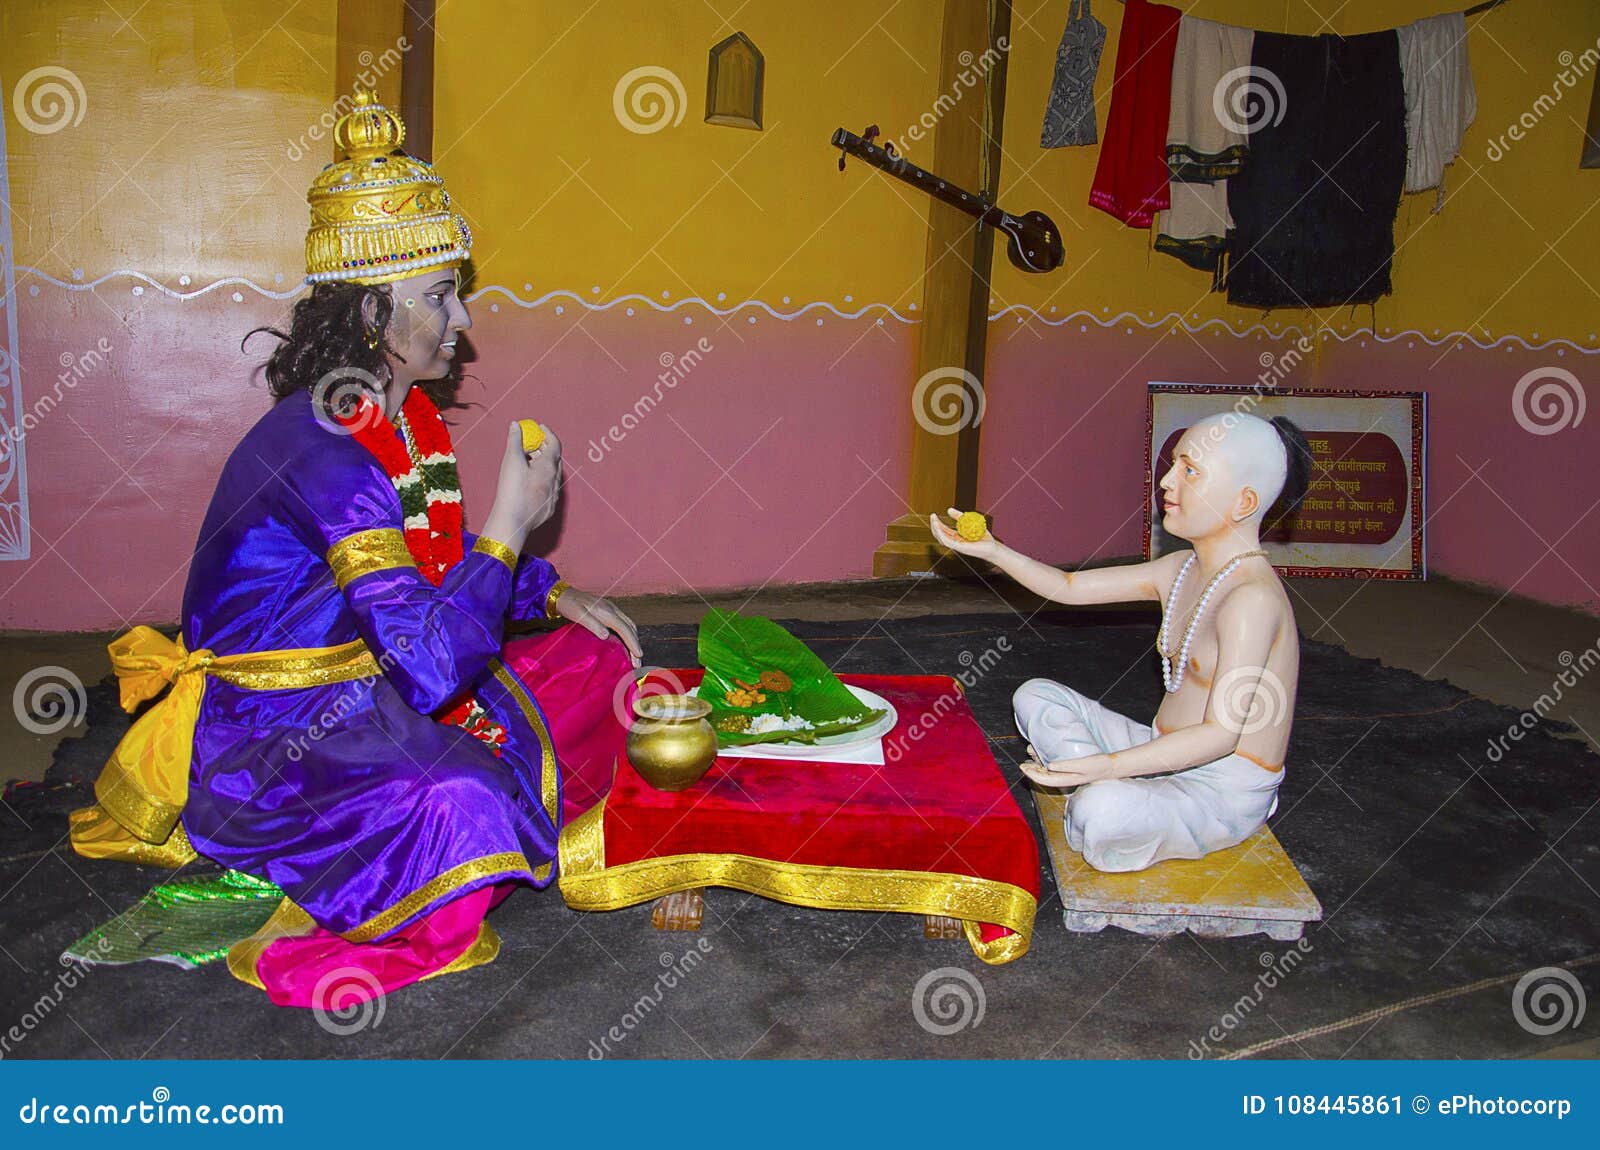 Saint Namdev Offering Prasad To Lord Vithoba Stock Image - Image ...